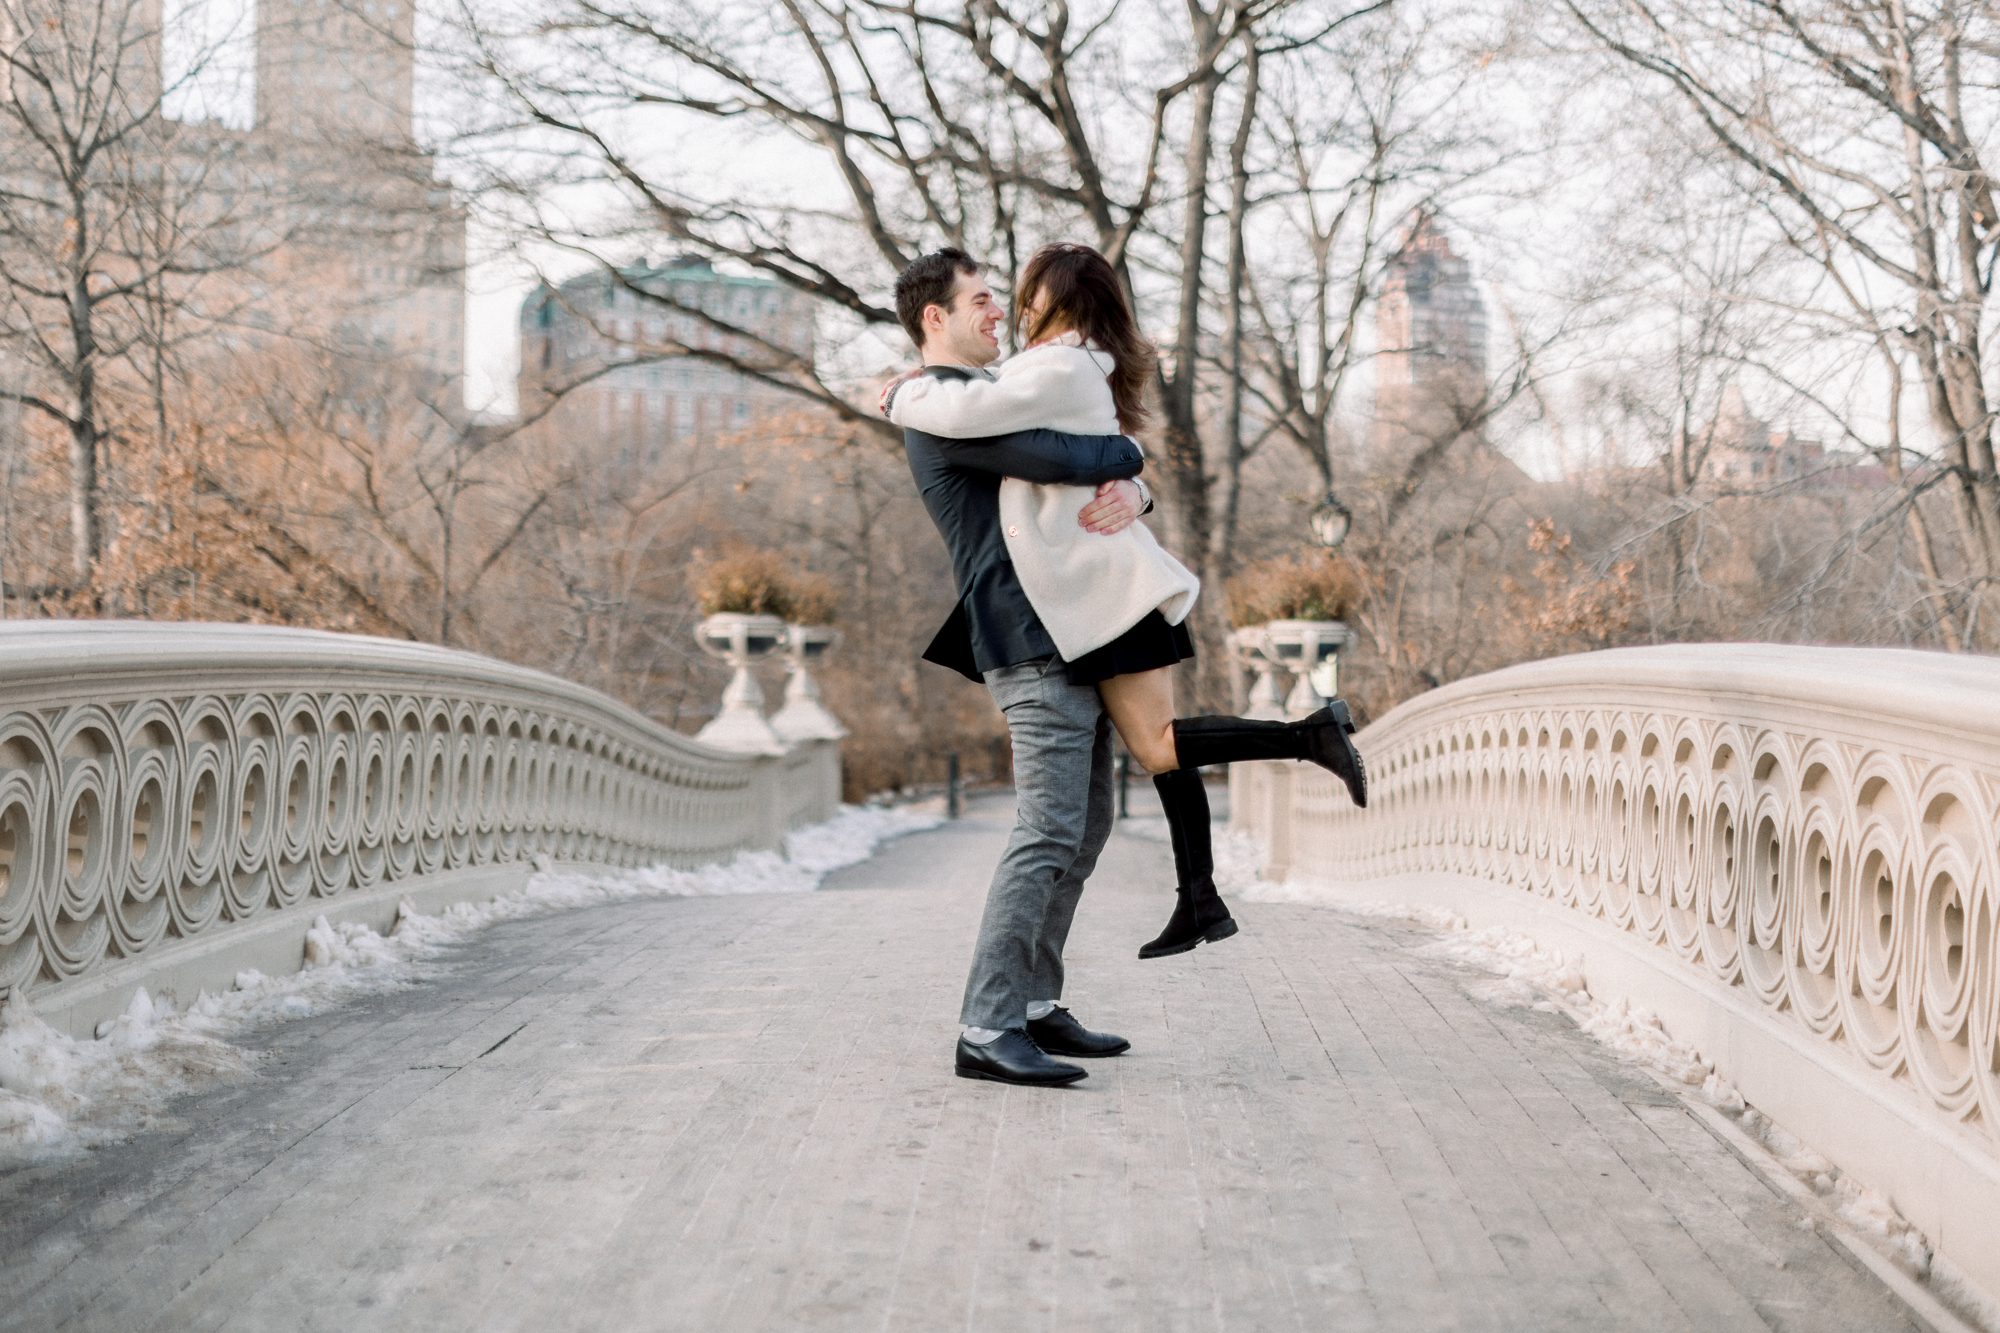 Fun Central Park elopement locations